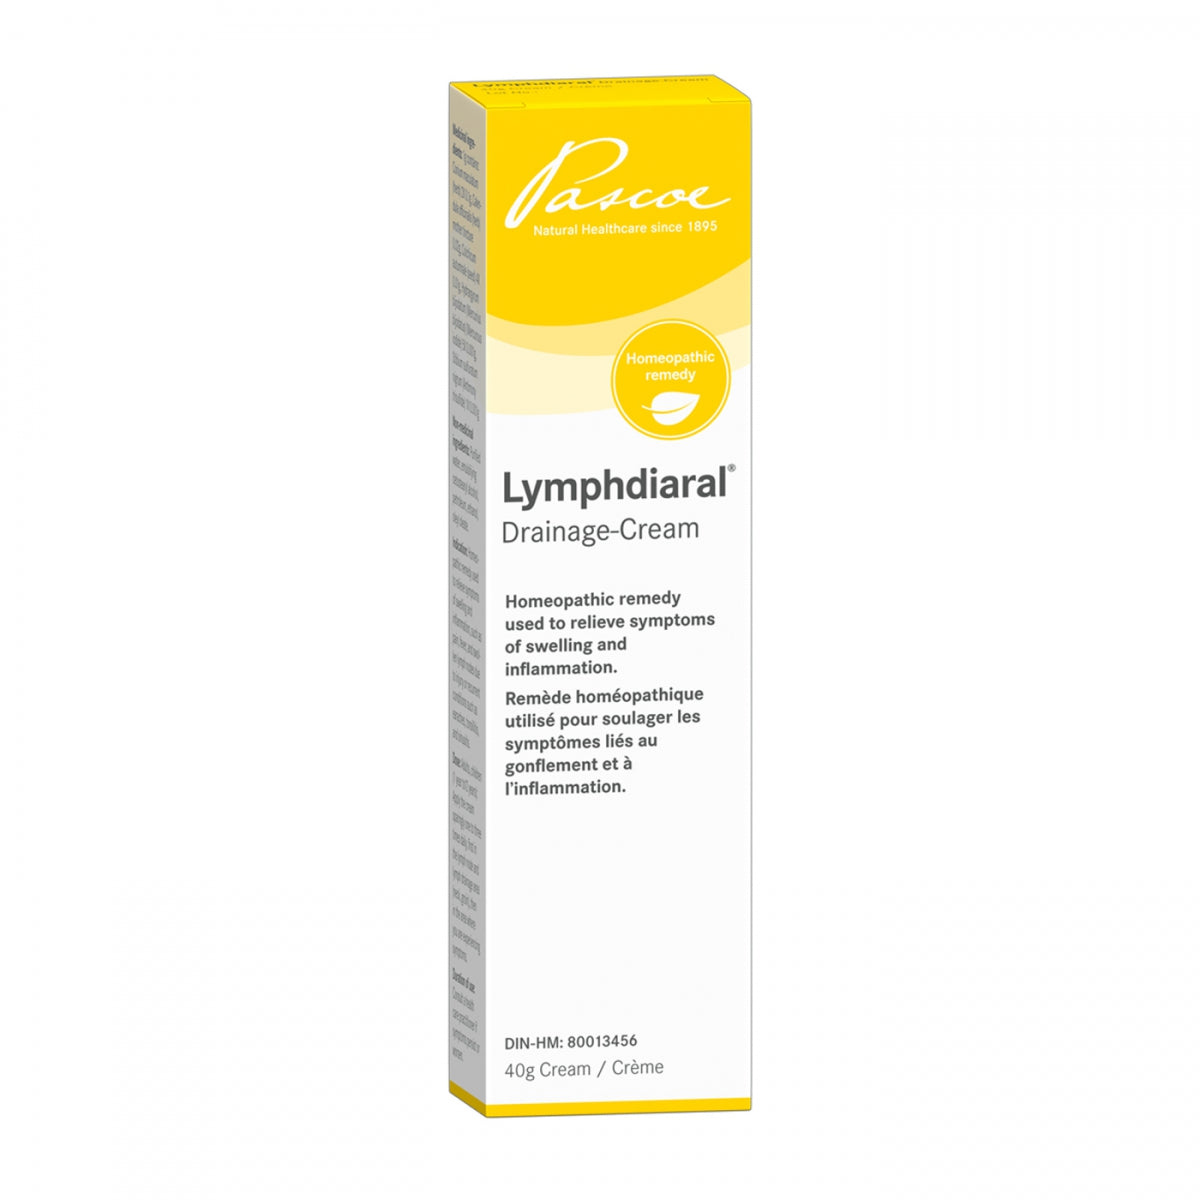 Lymphdiaral Drainage-Cream